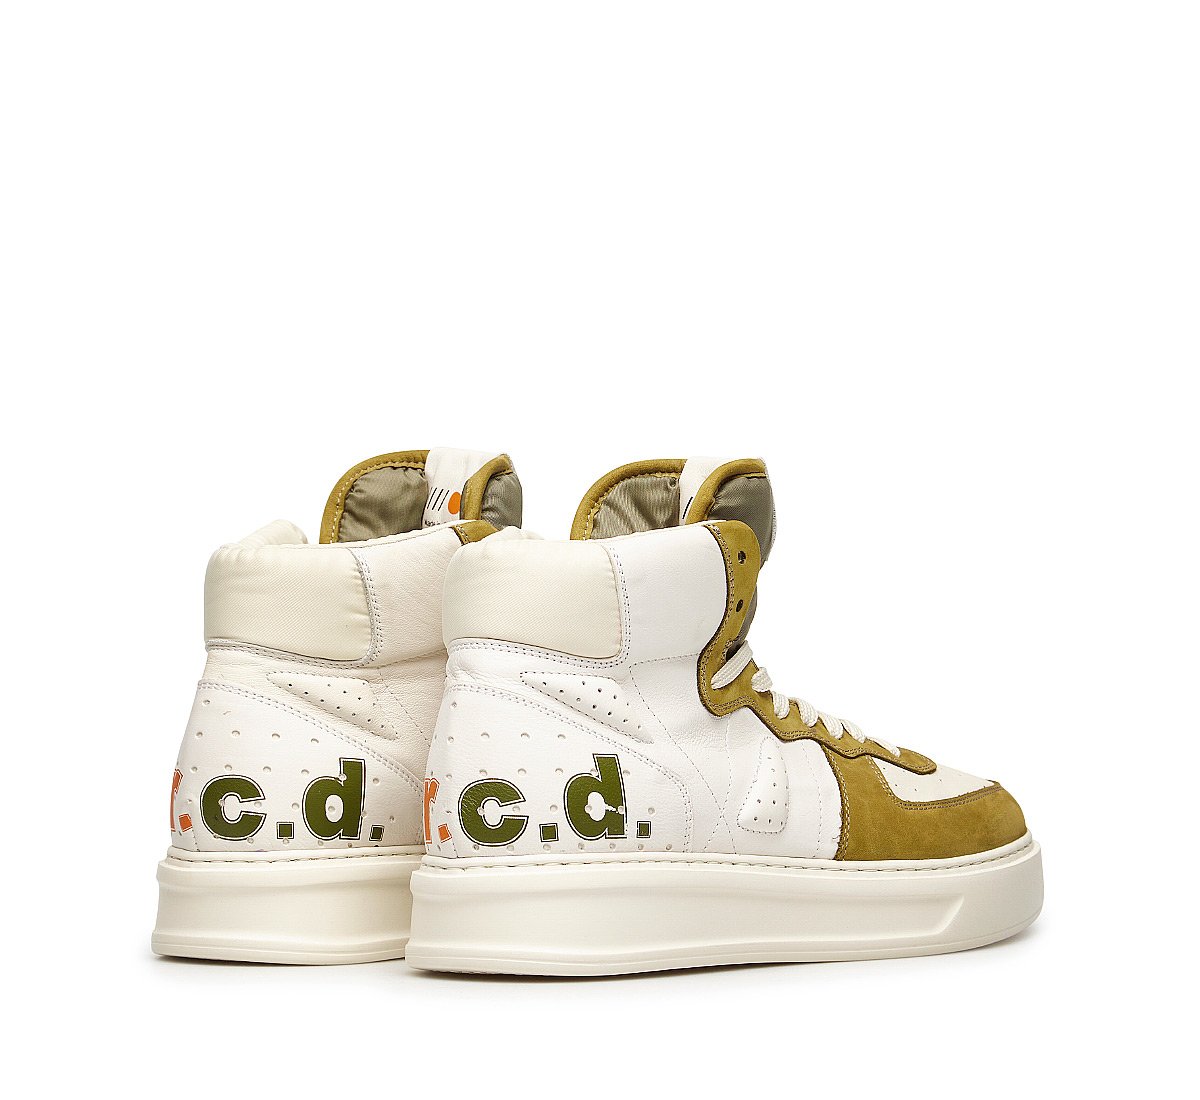 Sneaker Barracuda B.r.c.d.